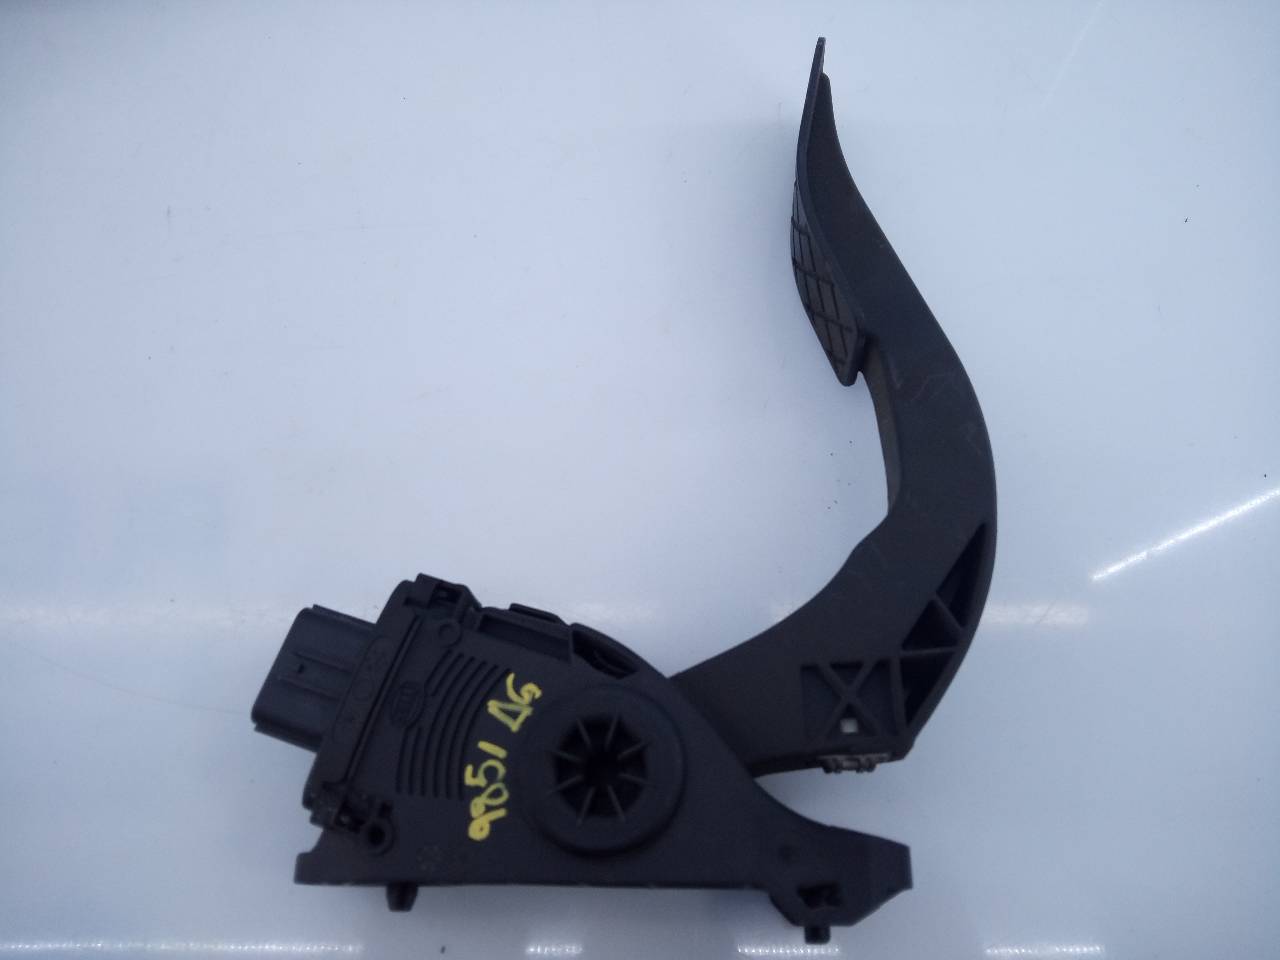 AUDI A6 C6/4F (2004-2011) Throttle Pedal 8K1723523, E2-A1-42-1 18773870